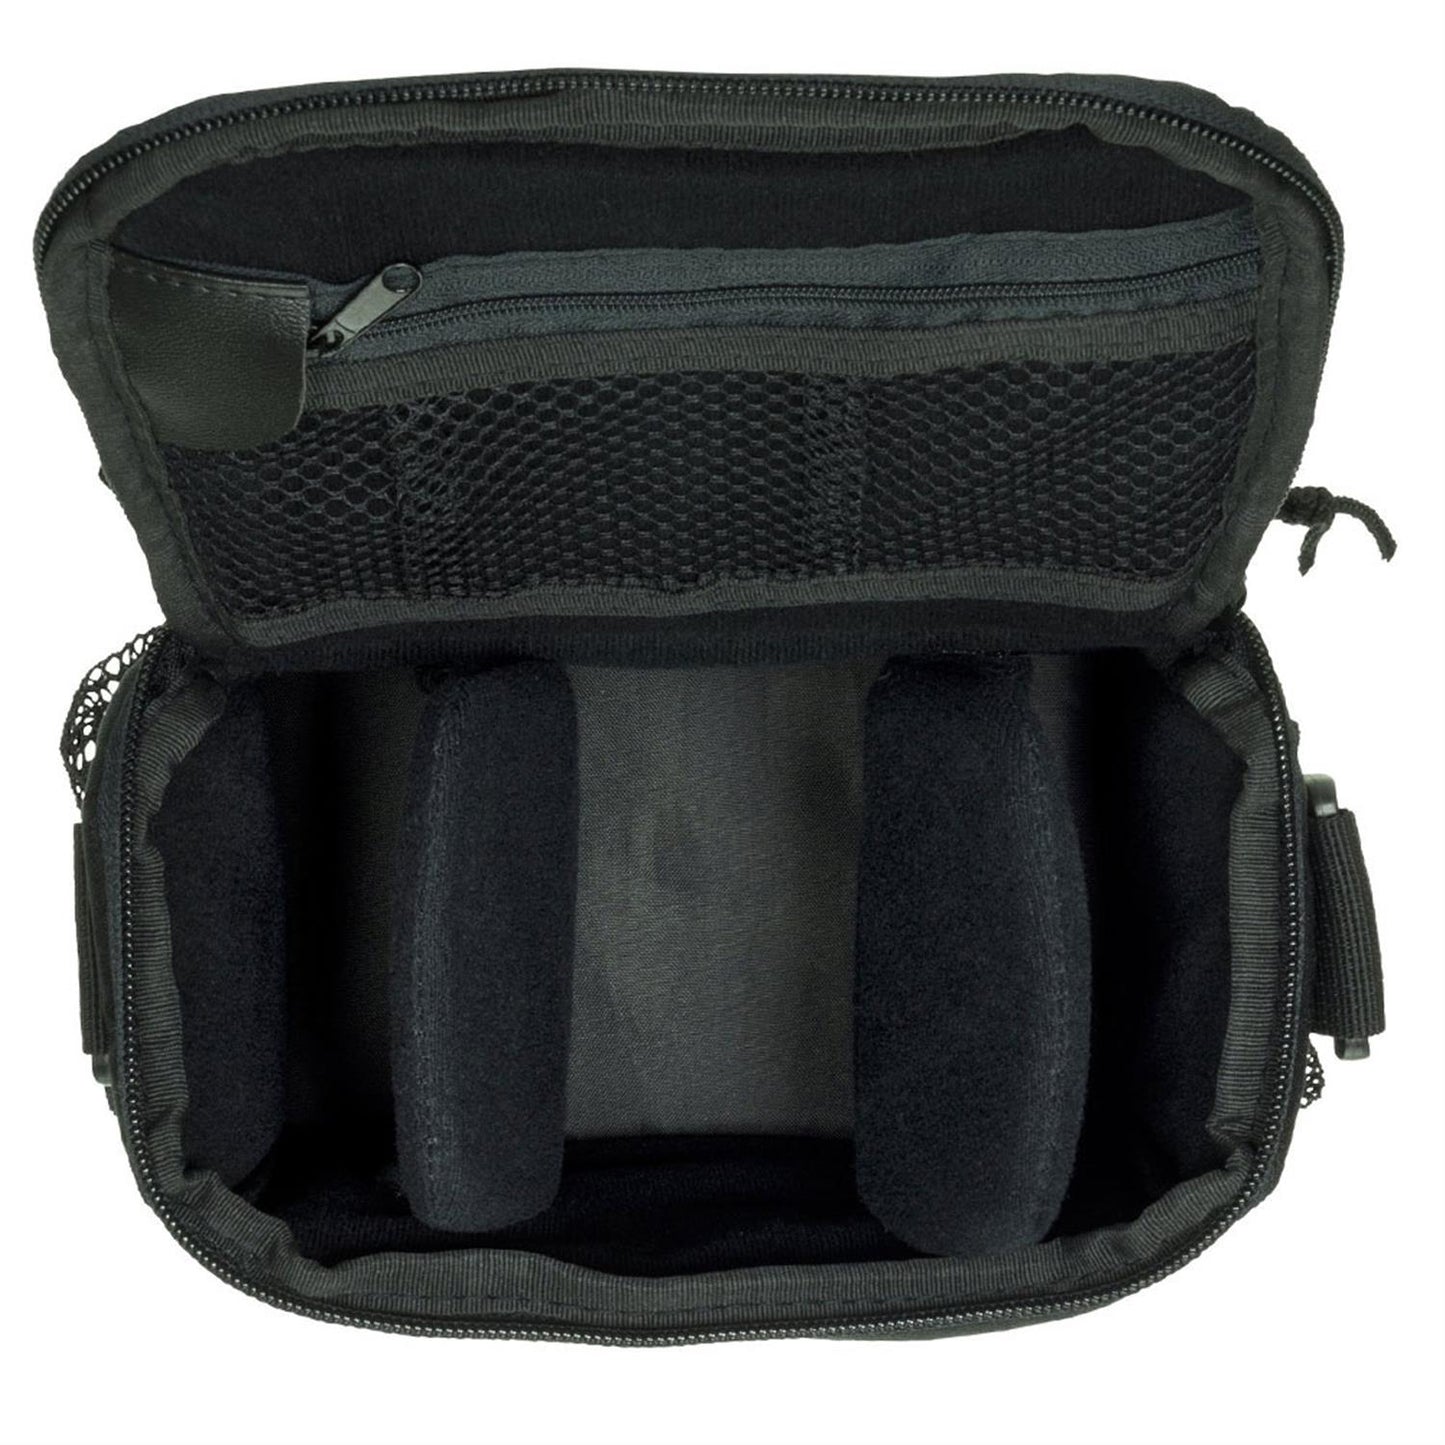 Dorr Action Black Camera Bag - No 2